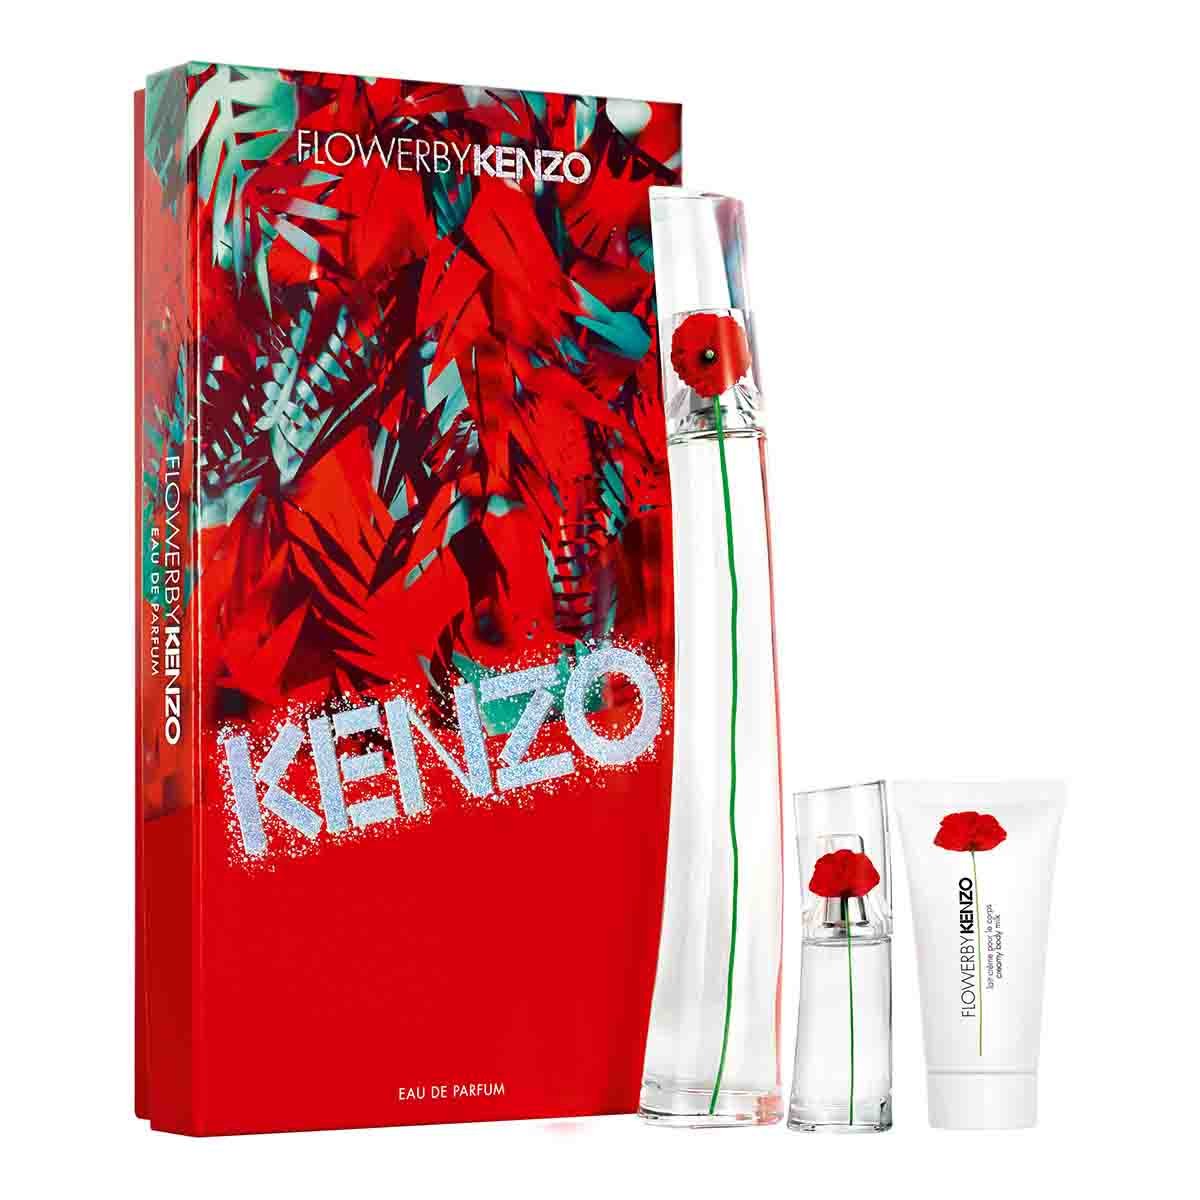 Estuche para Dama Flower By Kenzo Edp 100Ml + Travel Spray 15Ml + Crema Perfumada 50Ml